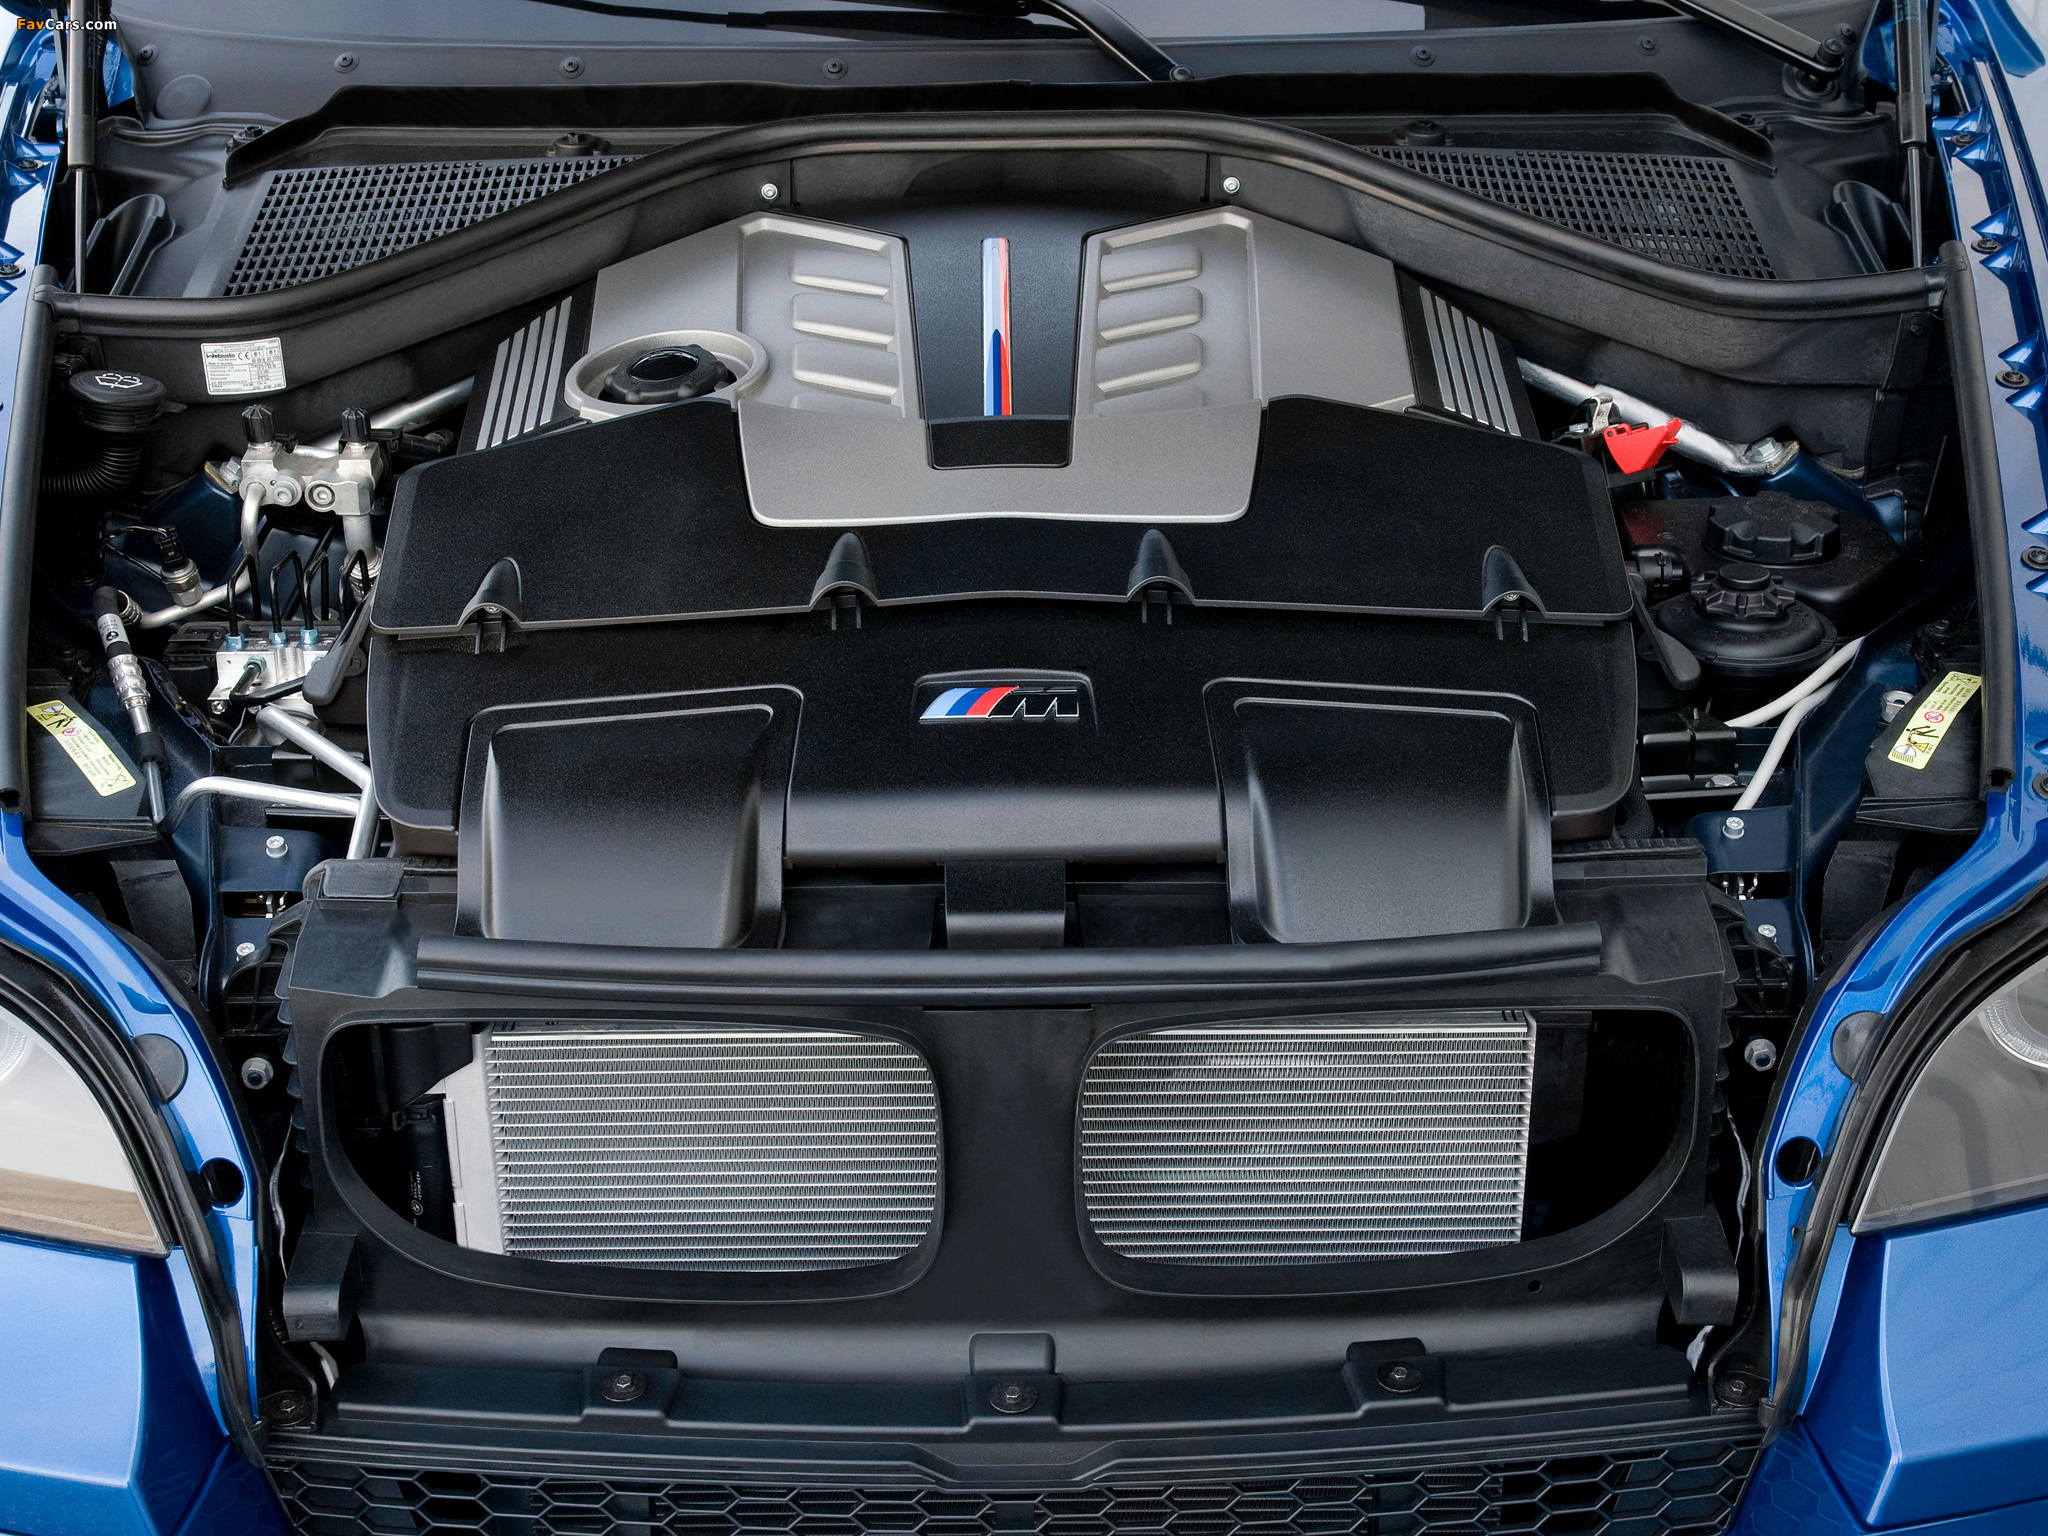 Bmw x6 двигатели. Двигатель BMW x6m. Мотор BMW x5 e70. BMW m5 f10 под капотом. BMW x5 e70 под капотом.